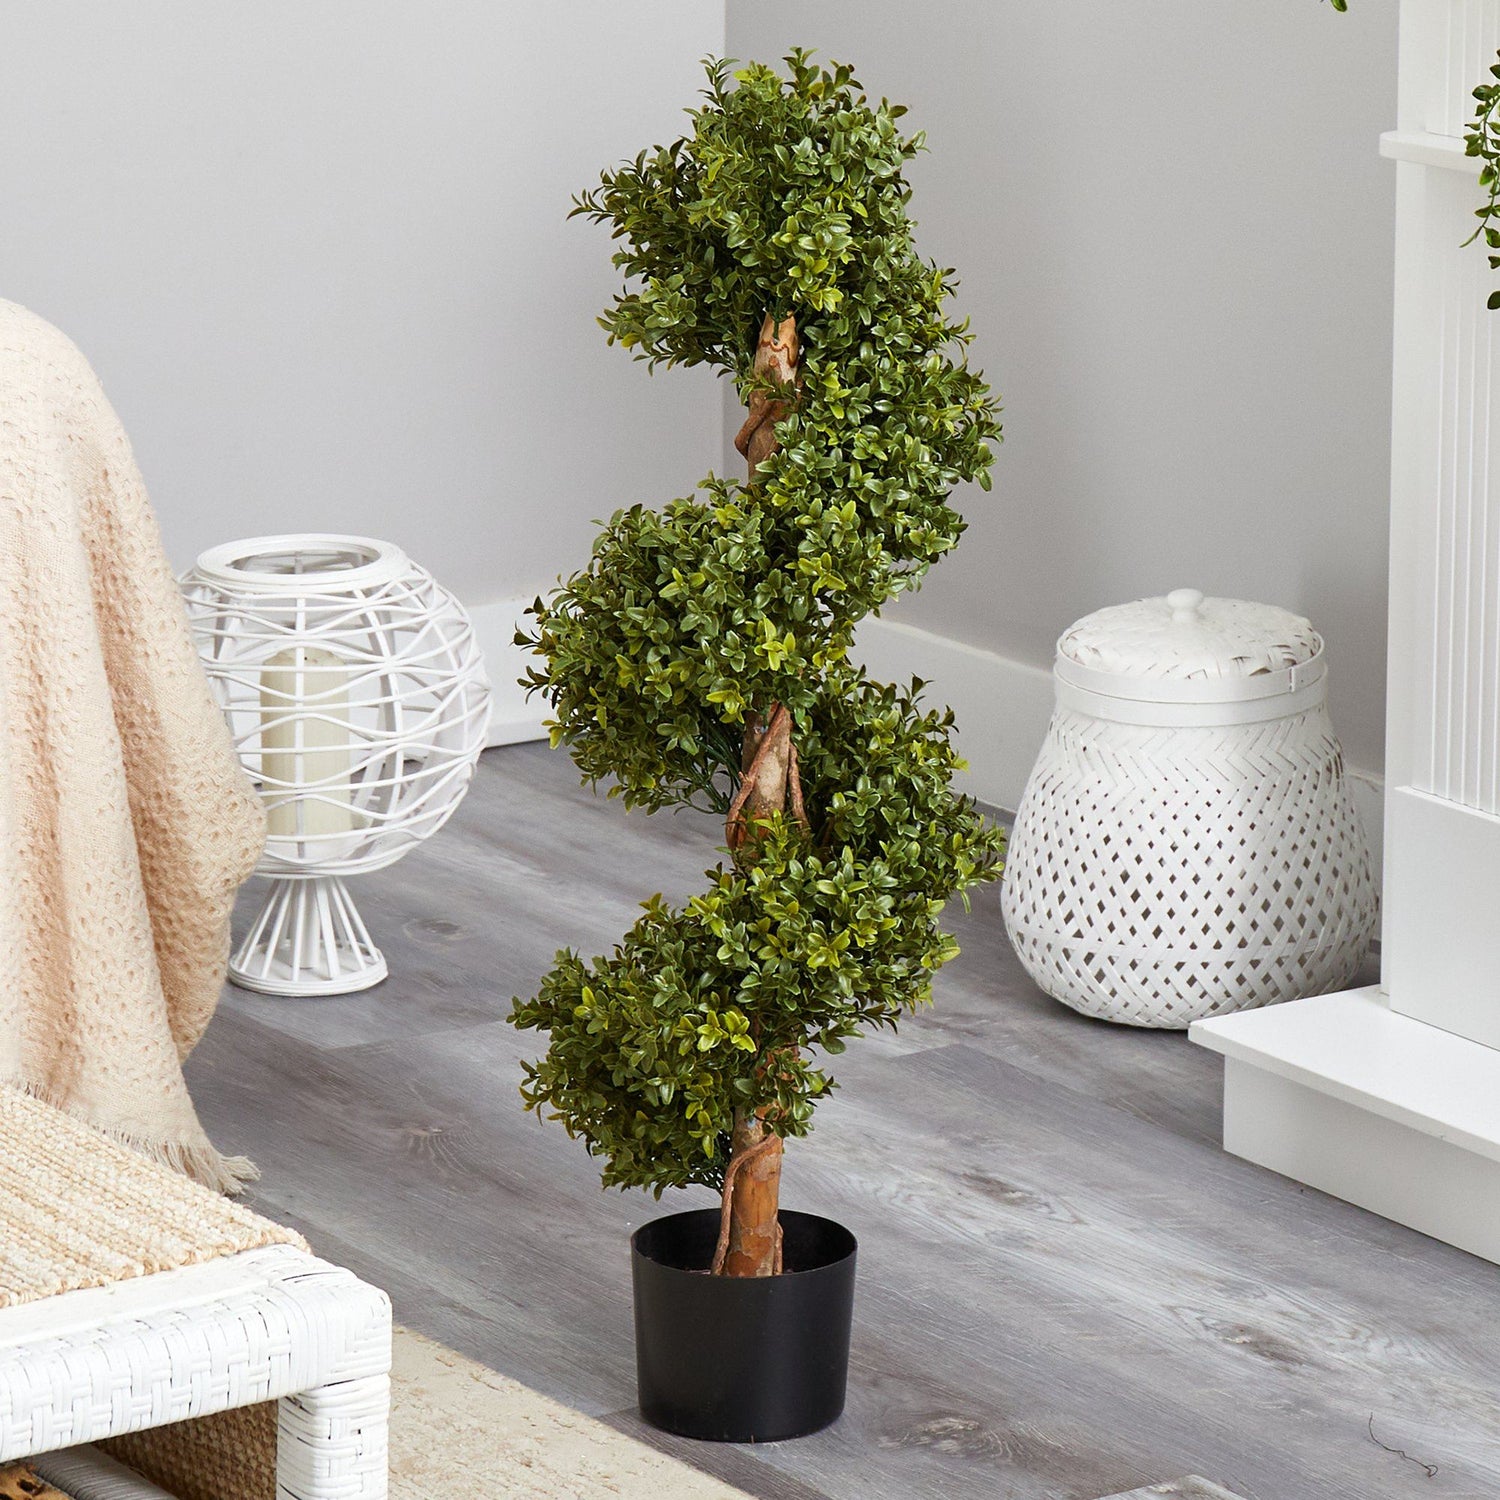 33” Boxwood Topiary Spiral Artificial Tree (Indoor/Outdoor)